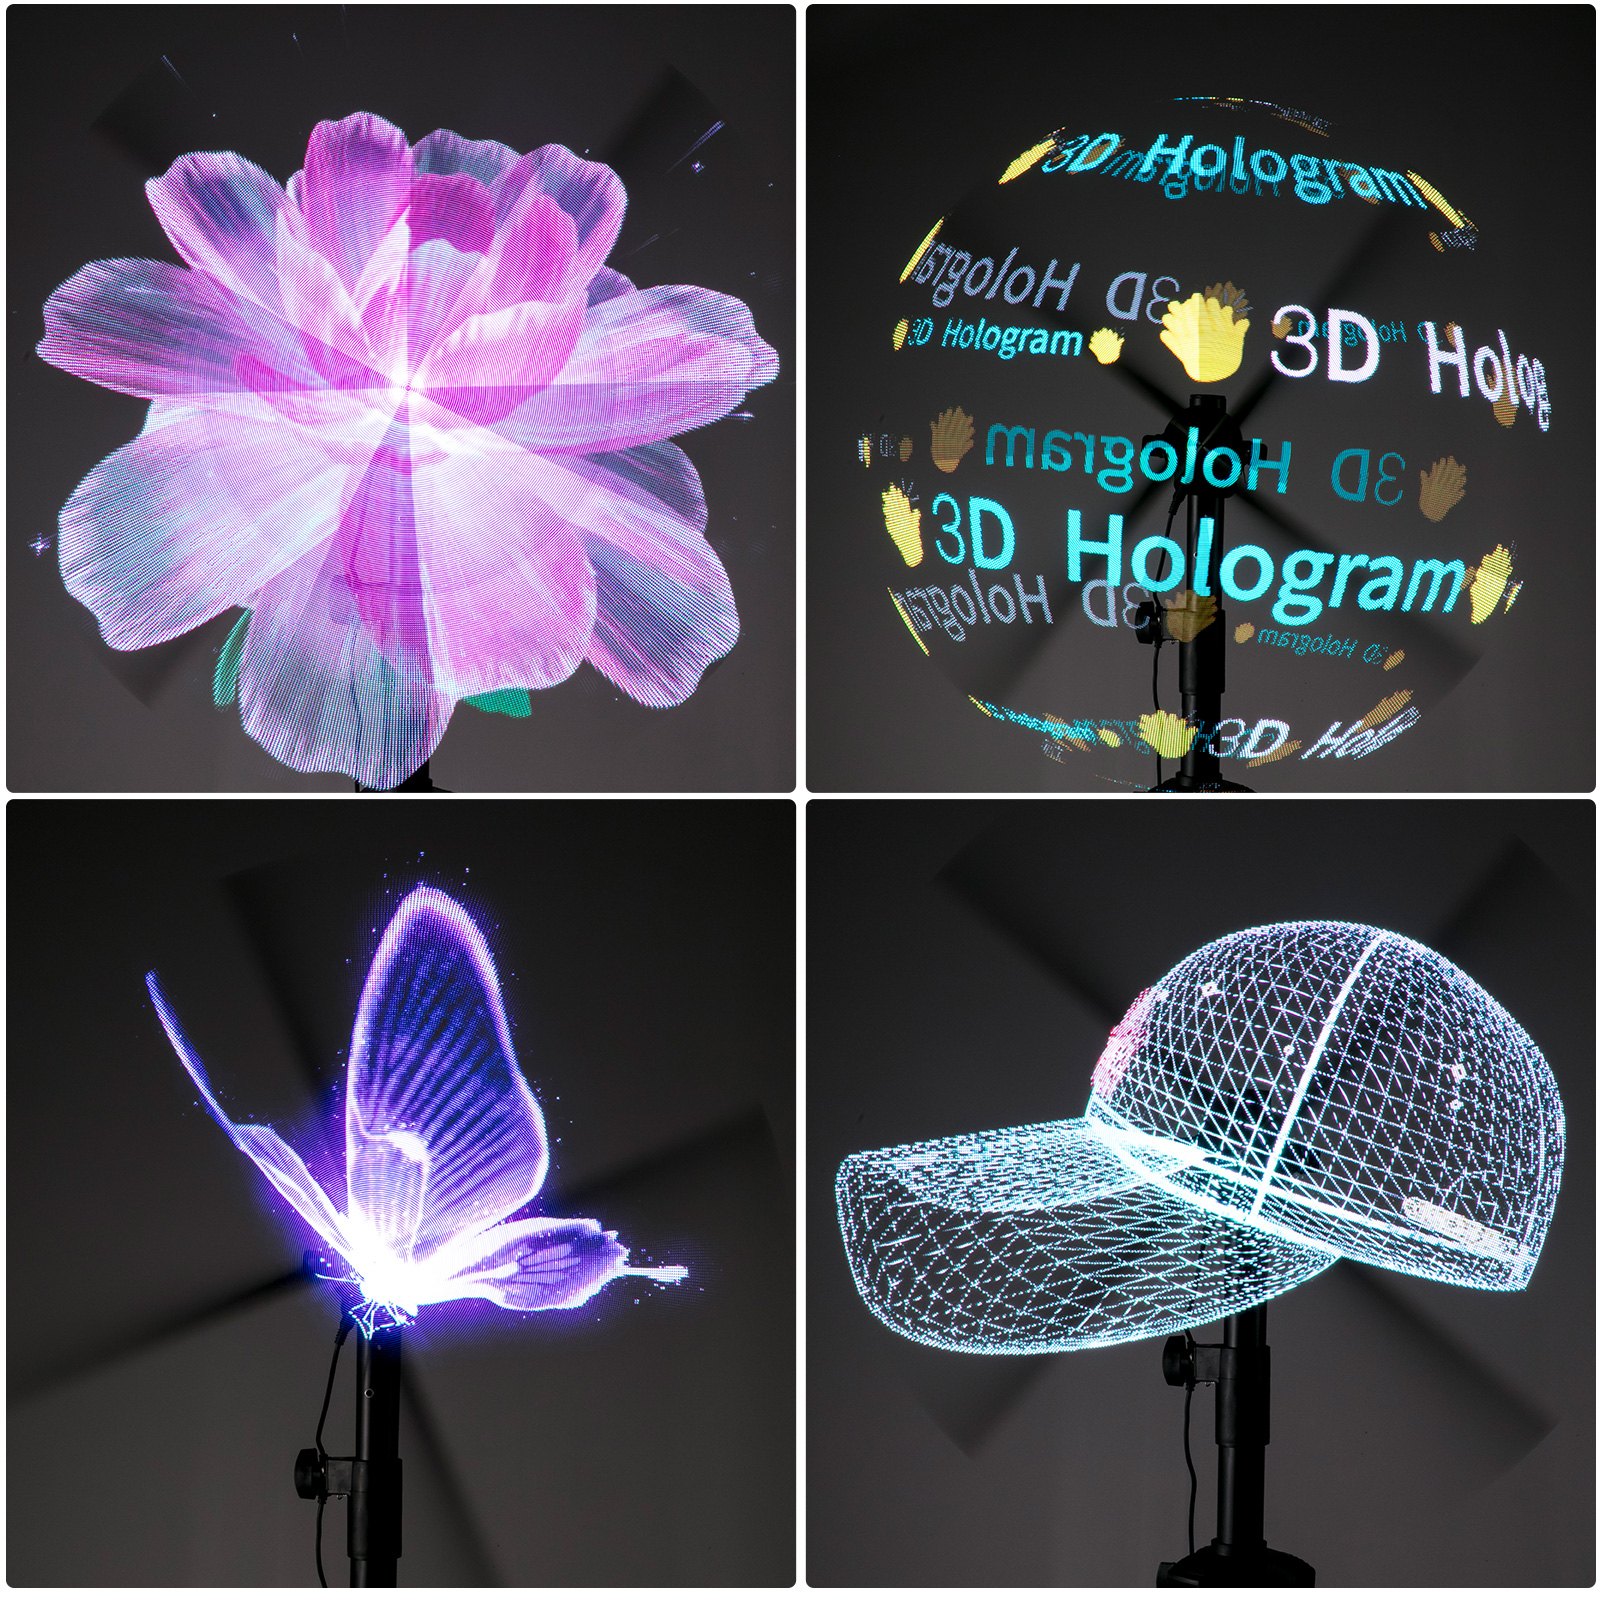 Holograma 3D